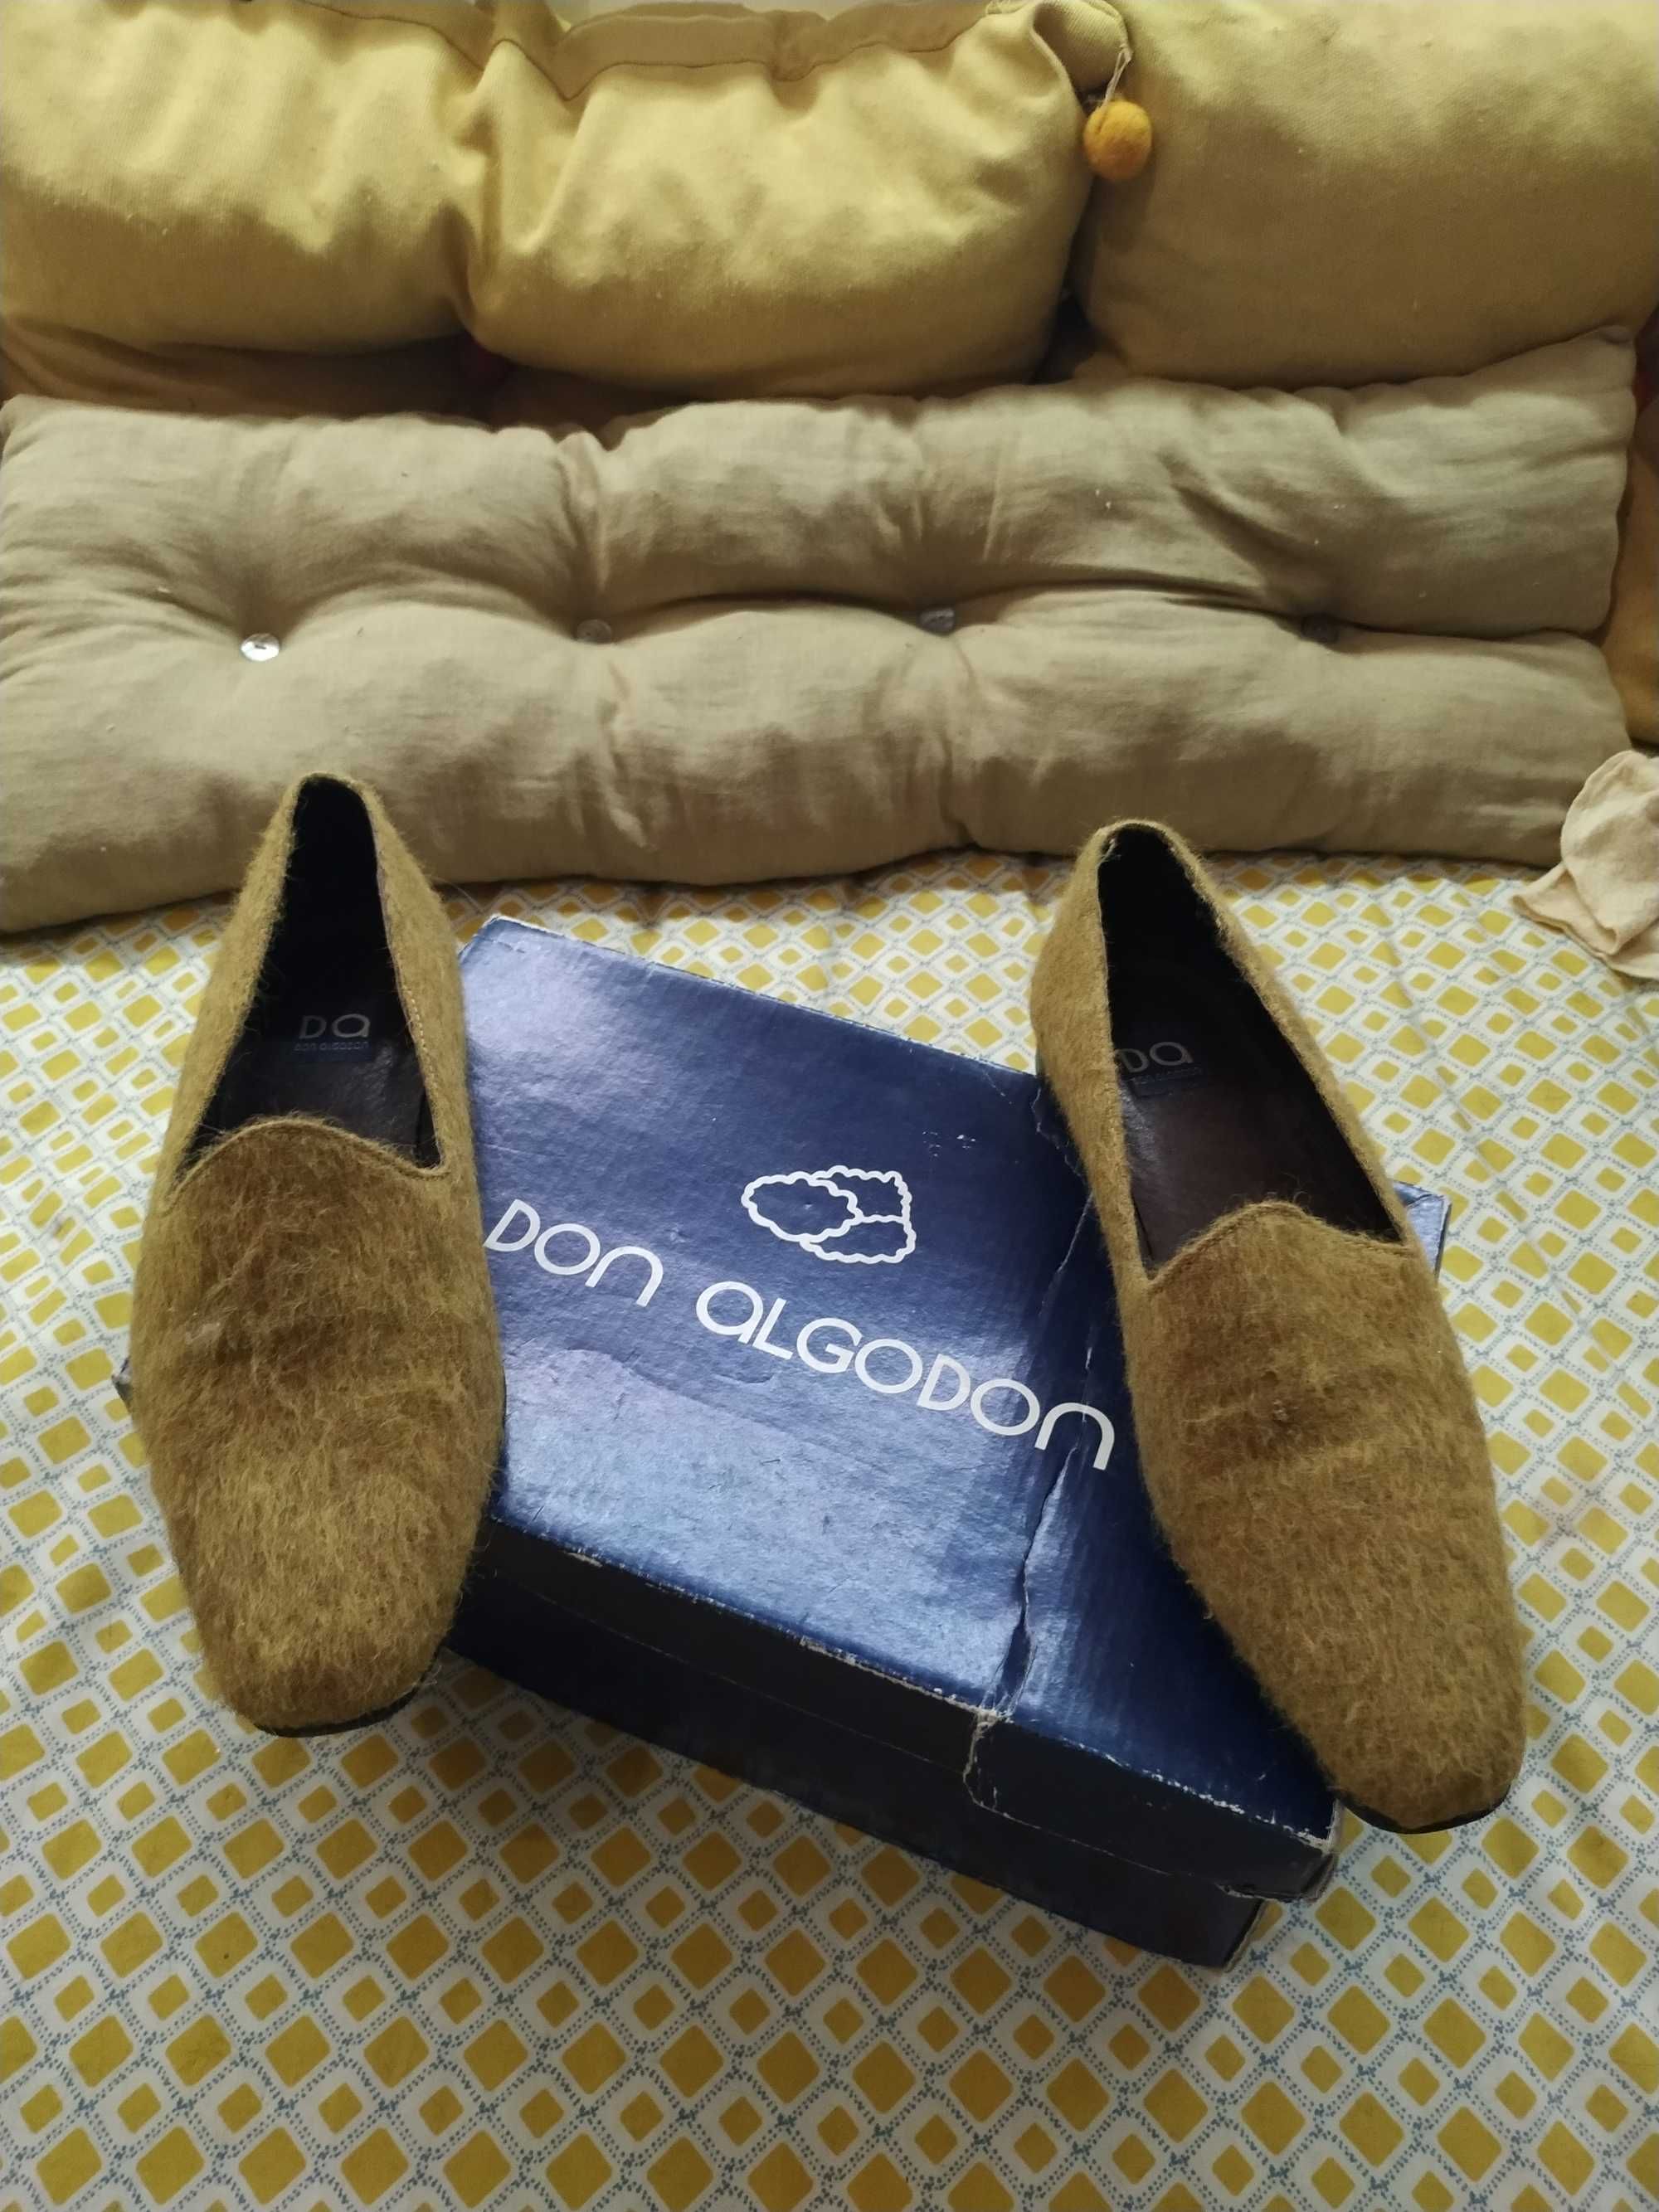 Sapatos Don Algodon